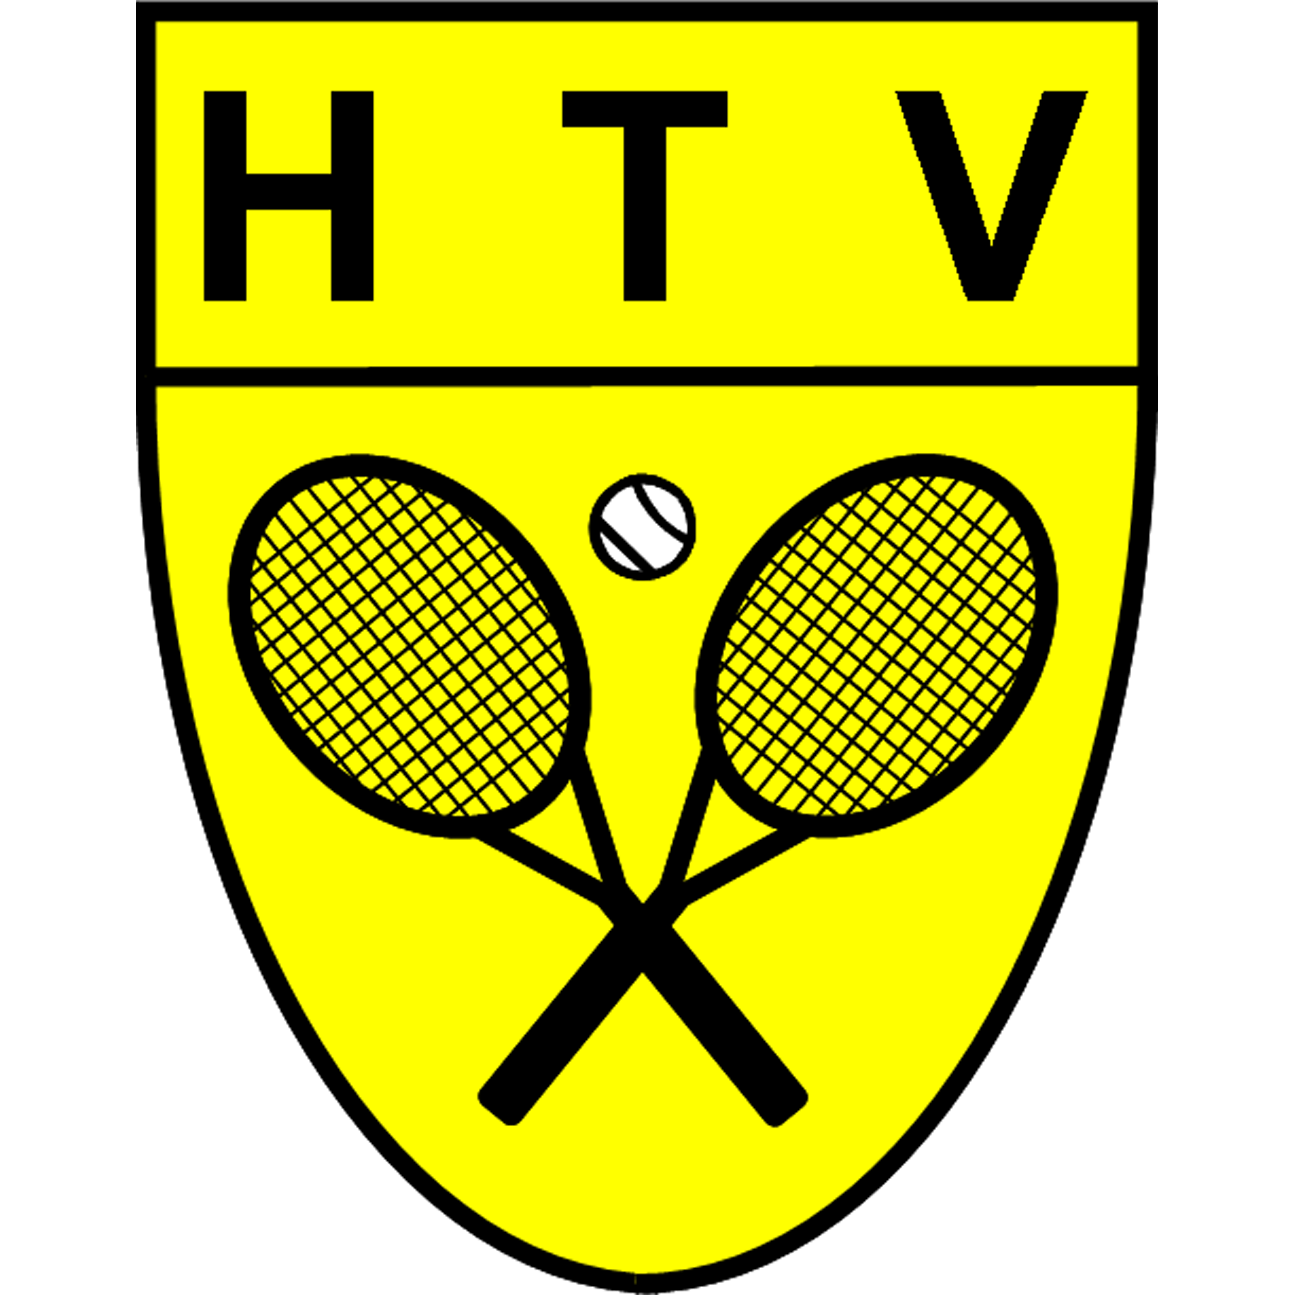 Profile image of venue HTV Halsteren